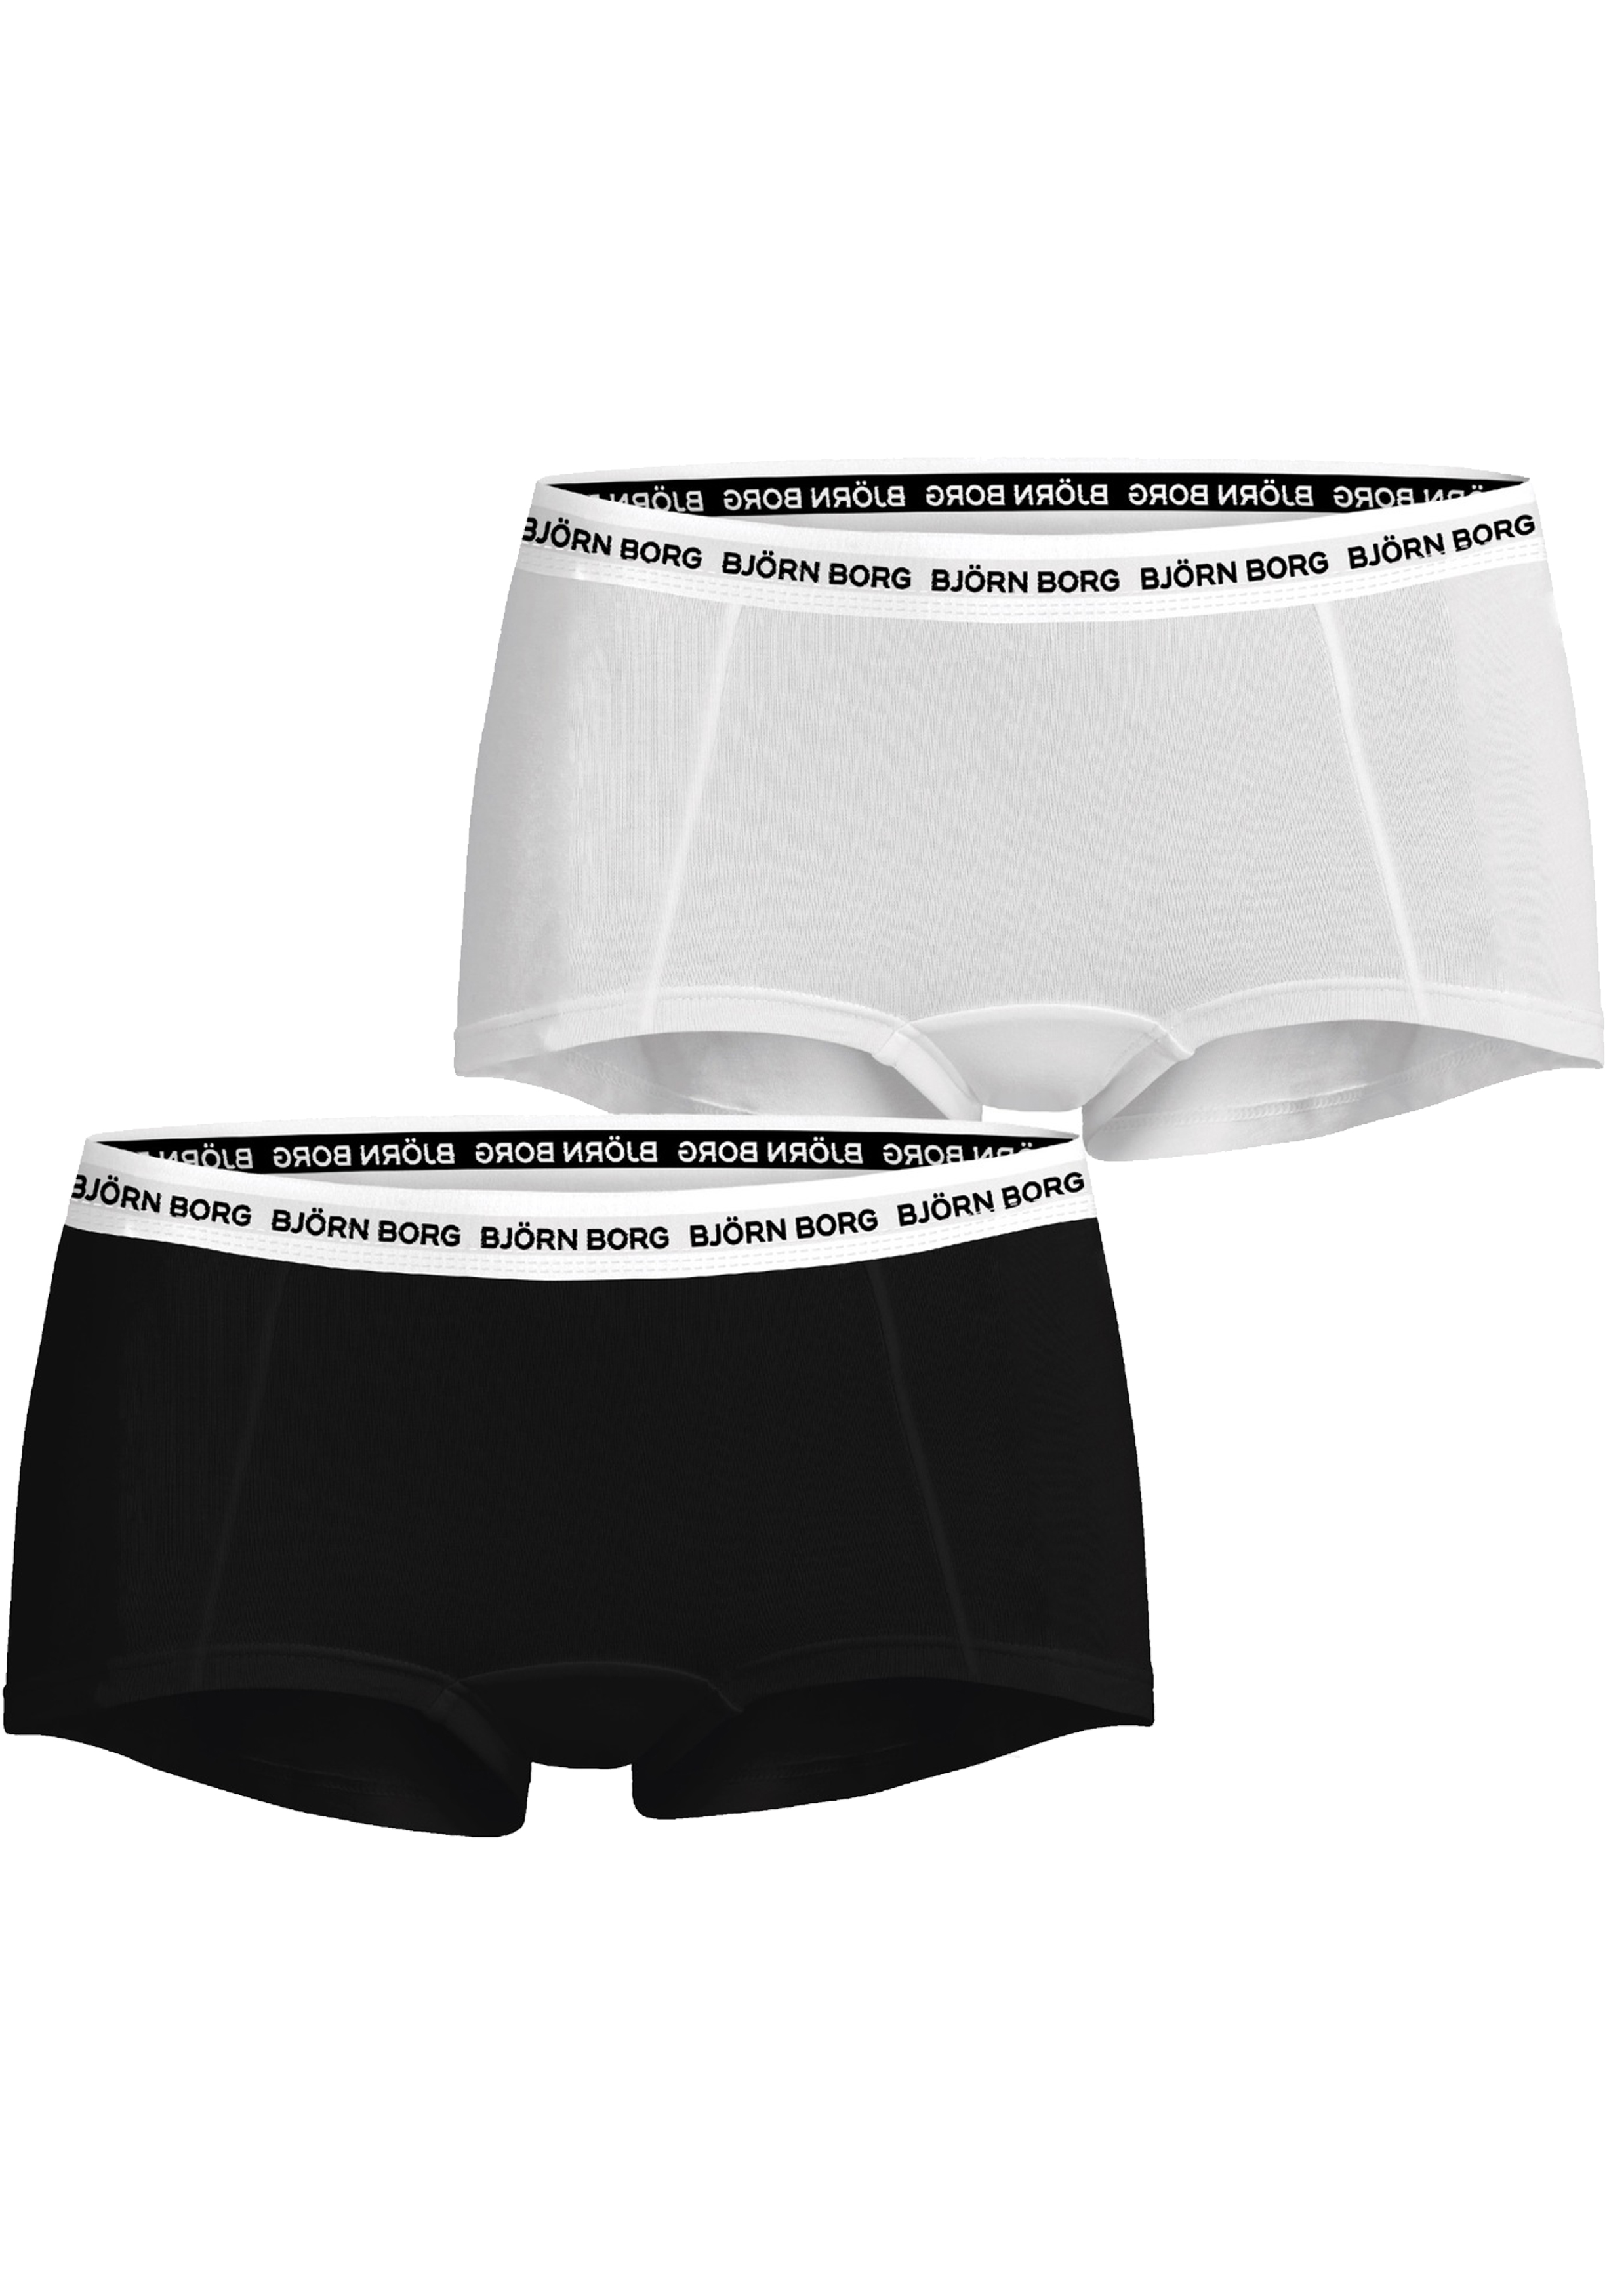 Bjorn Borg dames Core minishorts, boxers korte pijpen (2-pack), multicolor